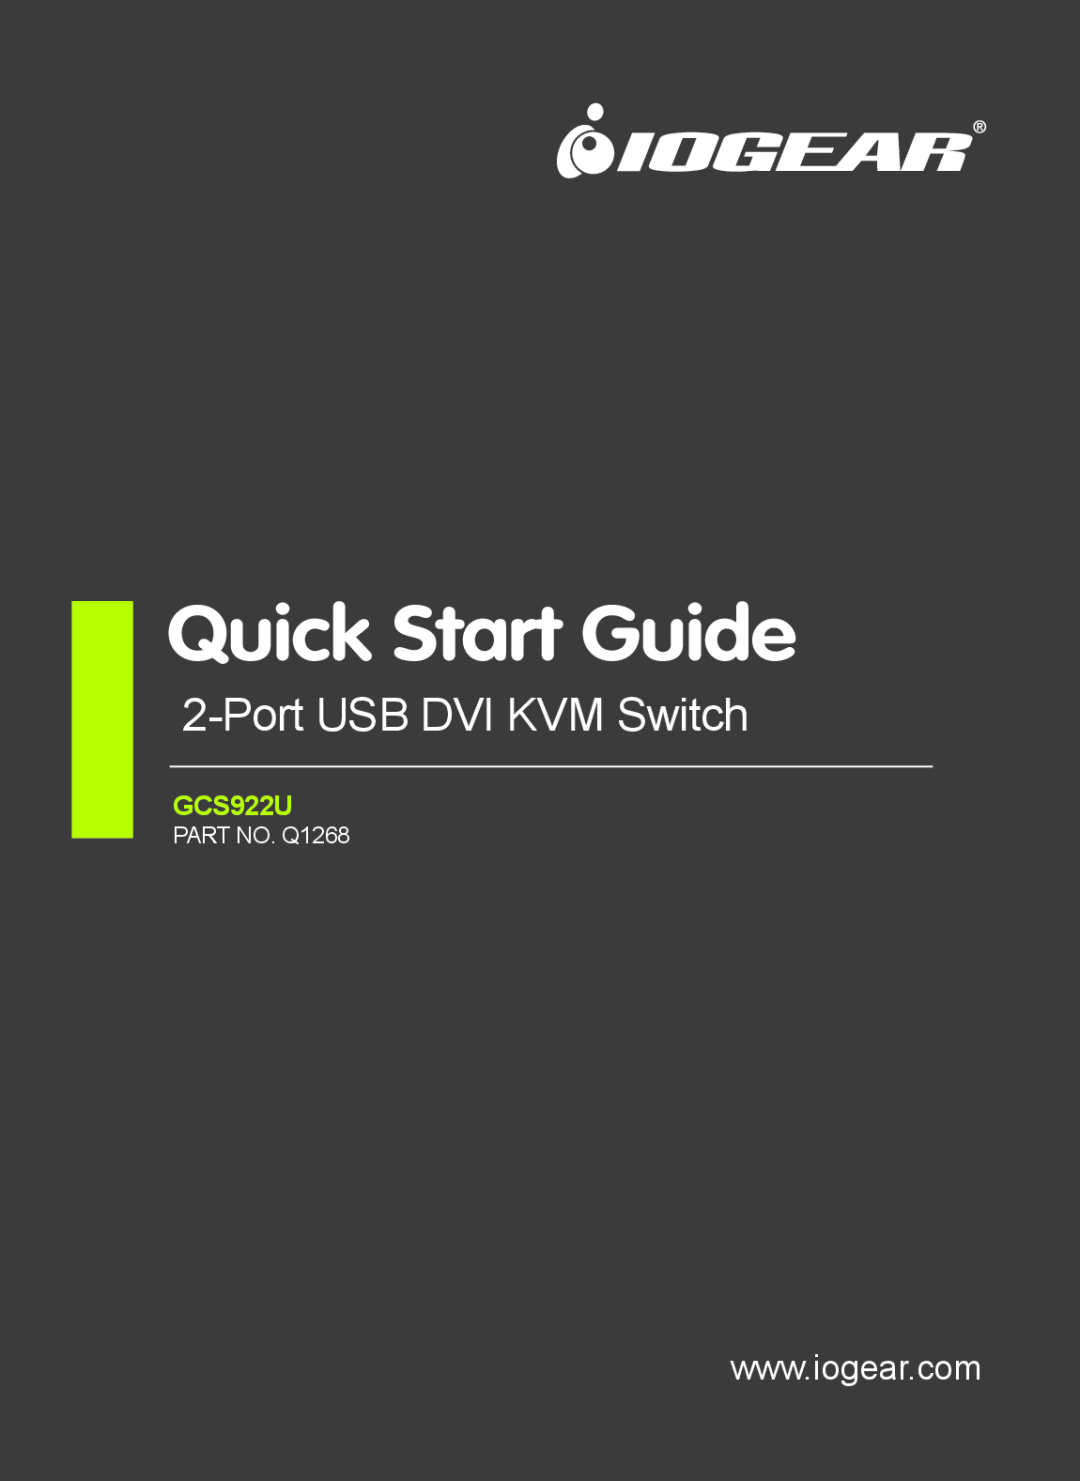 IOGear GCS922U quick start Quick Start Guide, Port USB DVI KVM Switch, PART NO. Q1268 